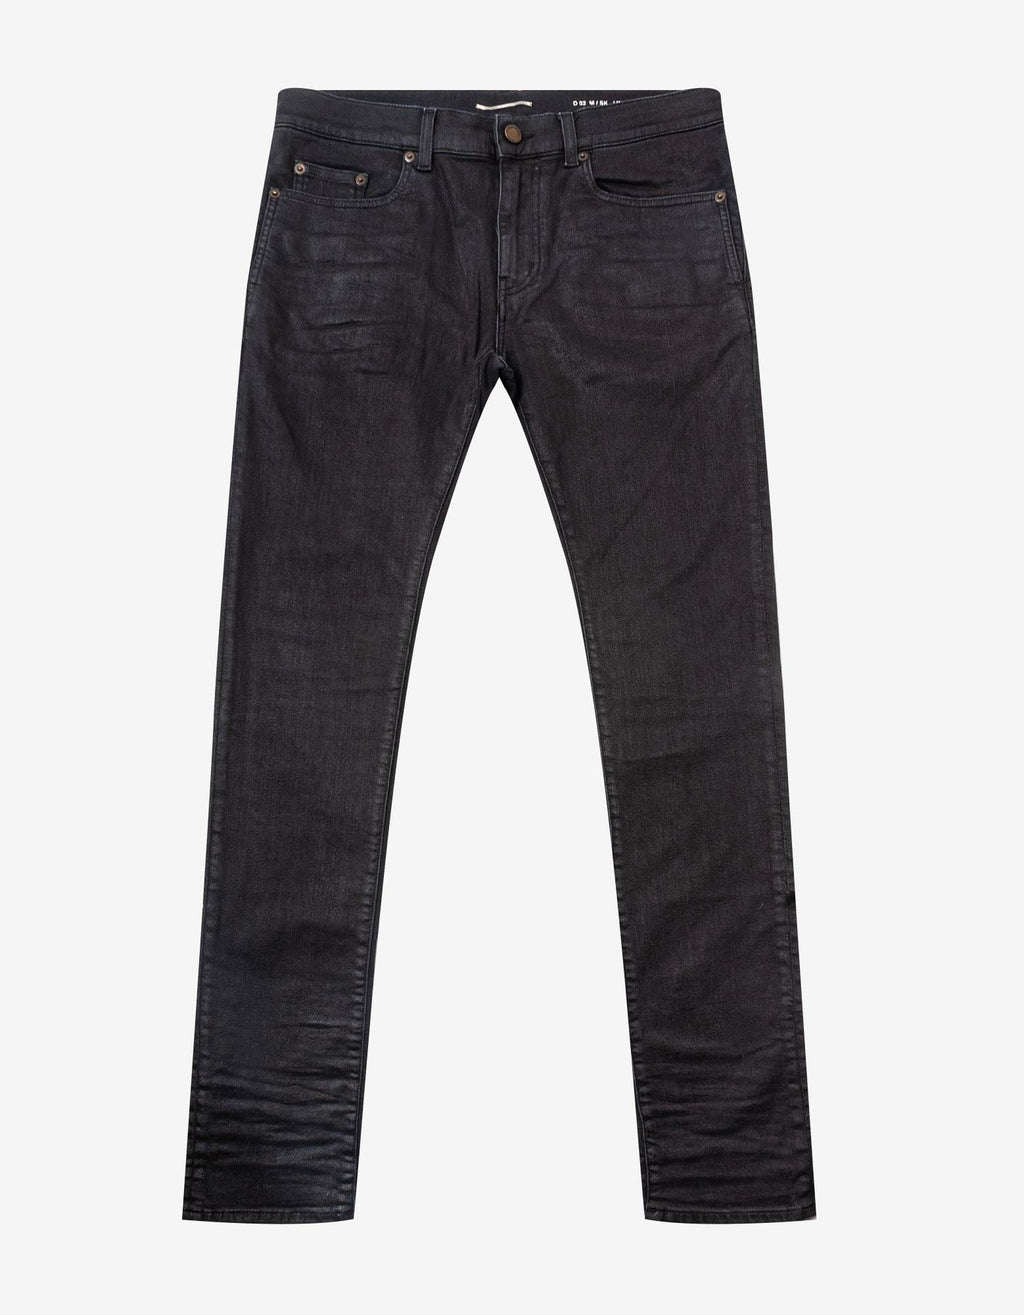 Saint Laurent Saint Laurent Black Coated Skinny Jeans